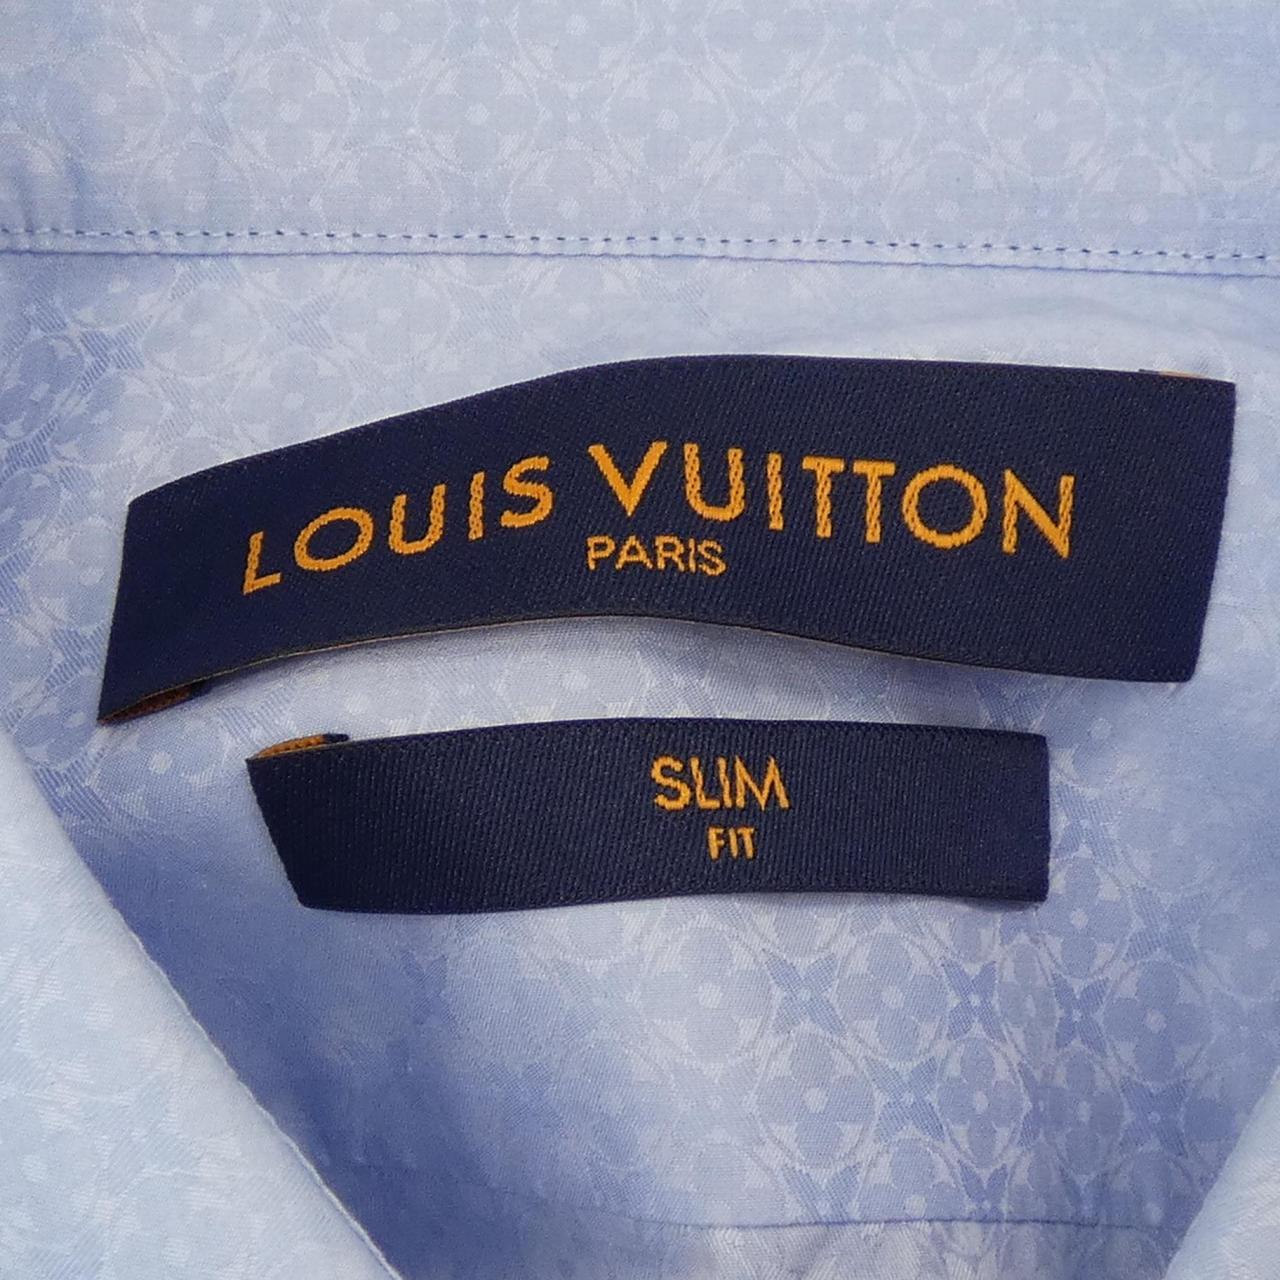 LOUIS LOUIS VUITTON shirt